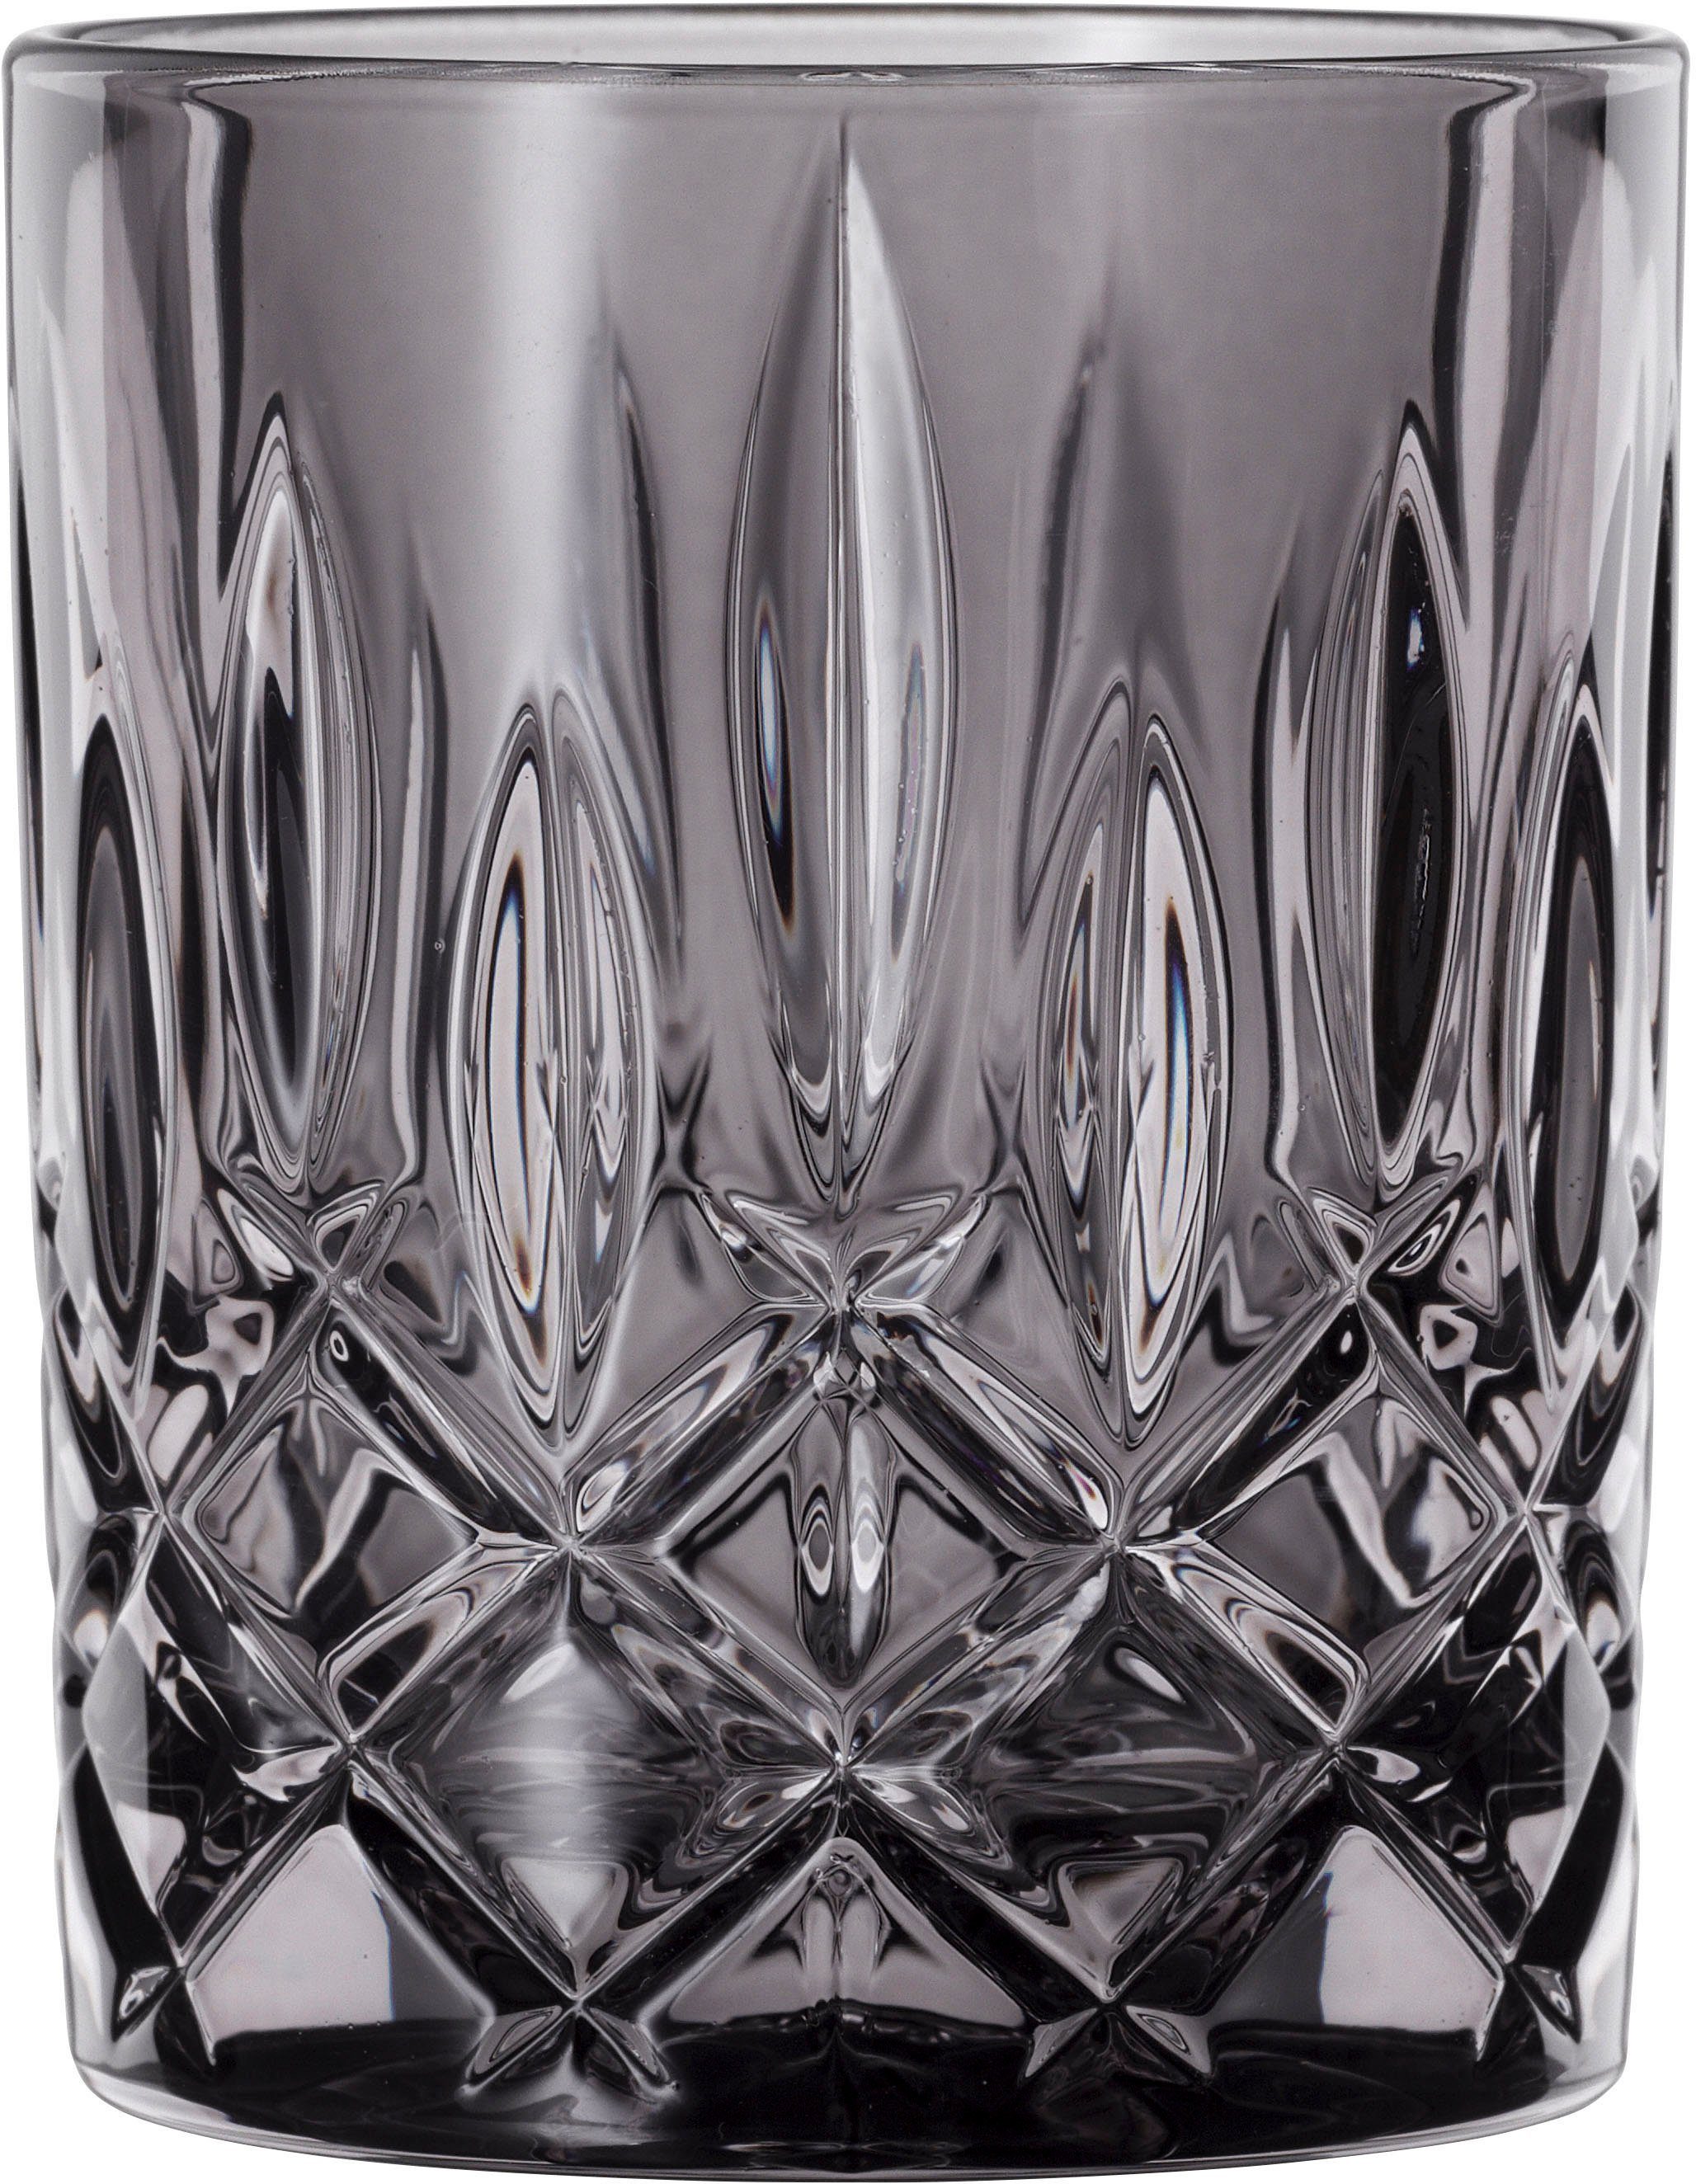 Nachtmann Whiskyglas Noblesse, Kristallglas, smoke 2-teilig ml, Made in 295 Germany